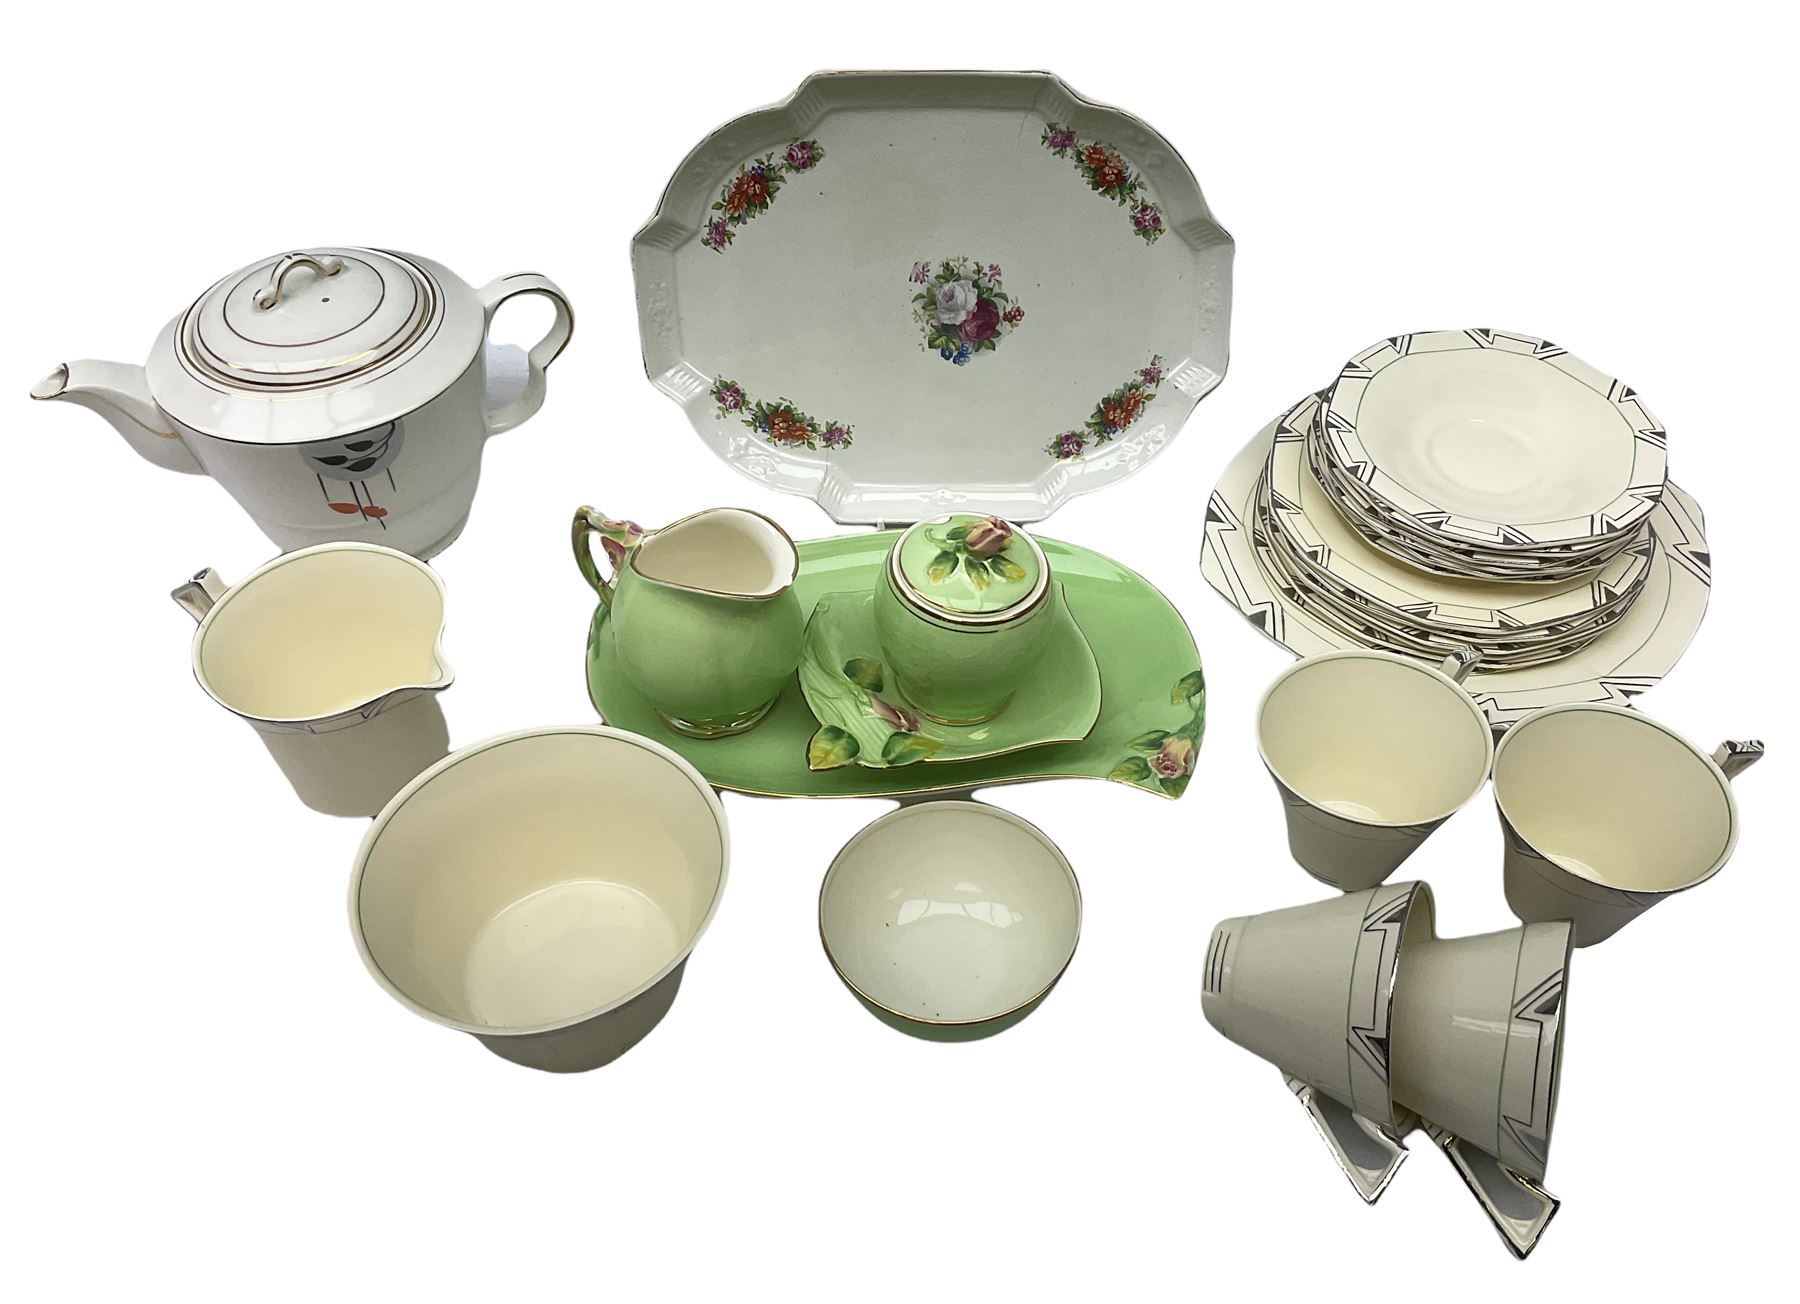 Art Deco style tea service by Alfred Meakin in Marigold pattern